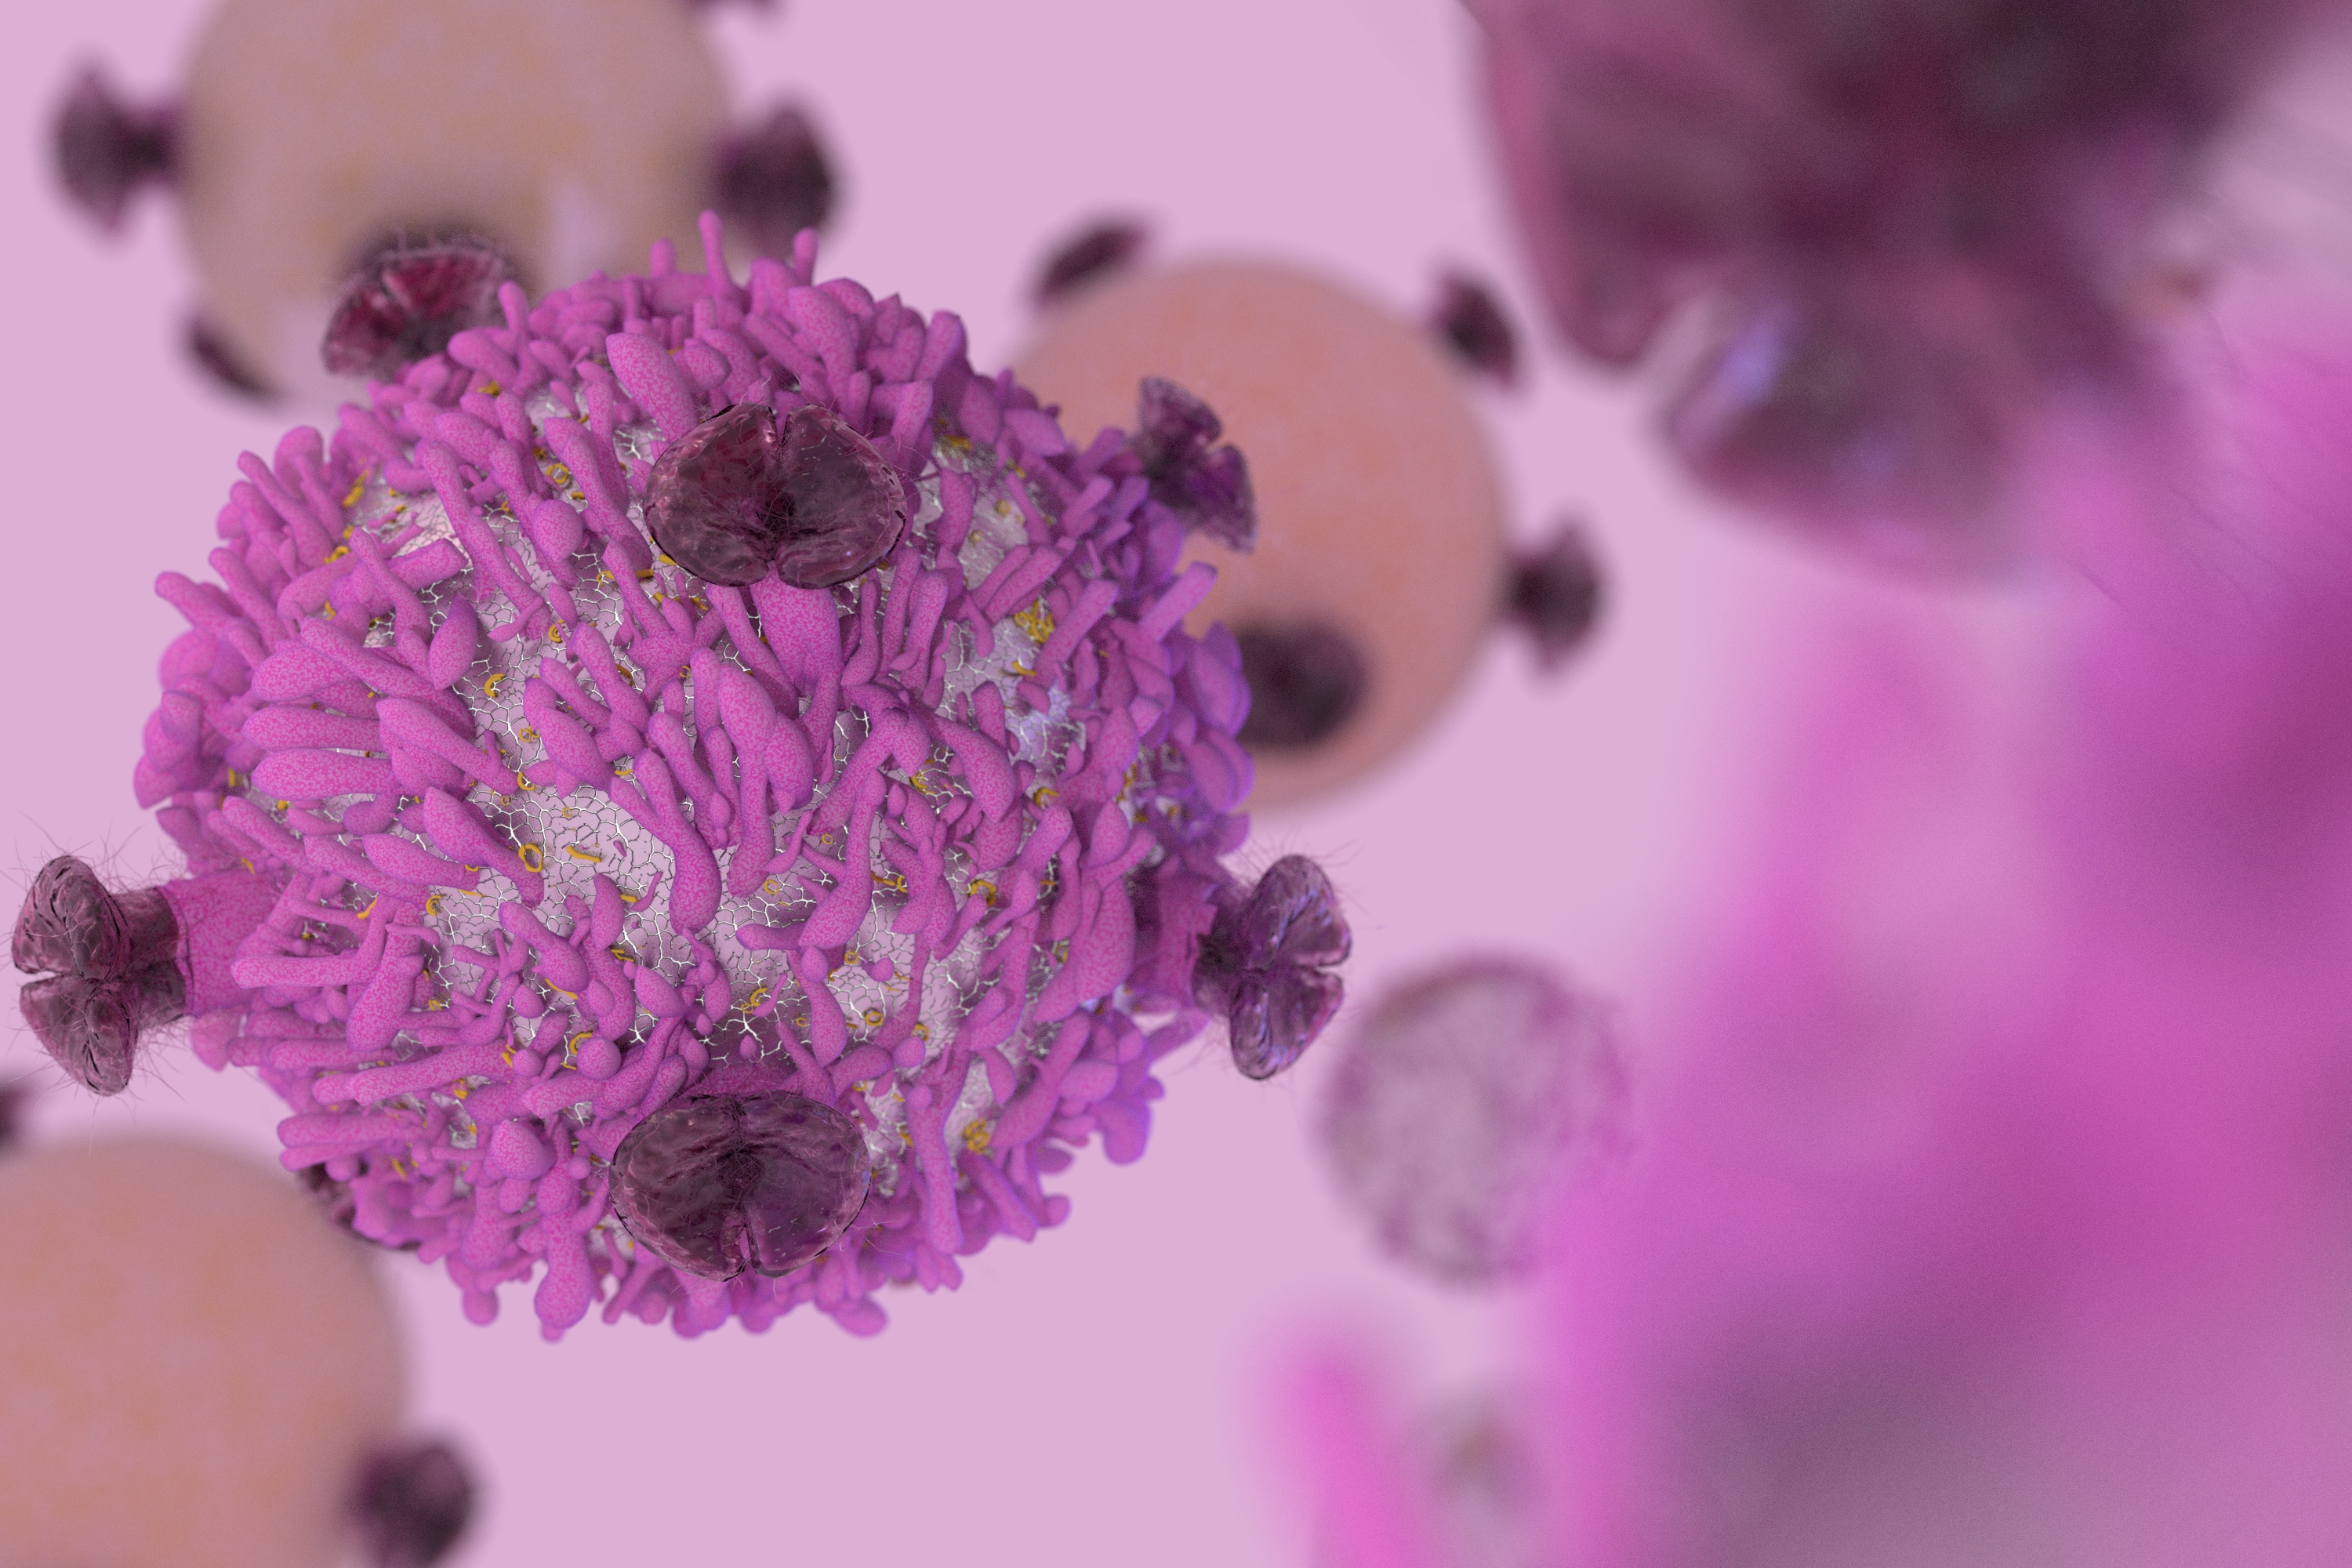 Antigen Specific T-cells